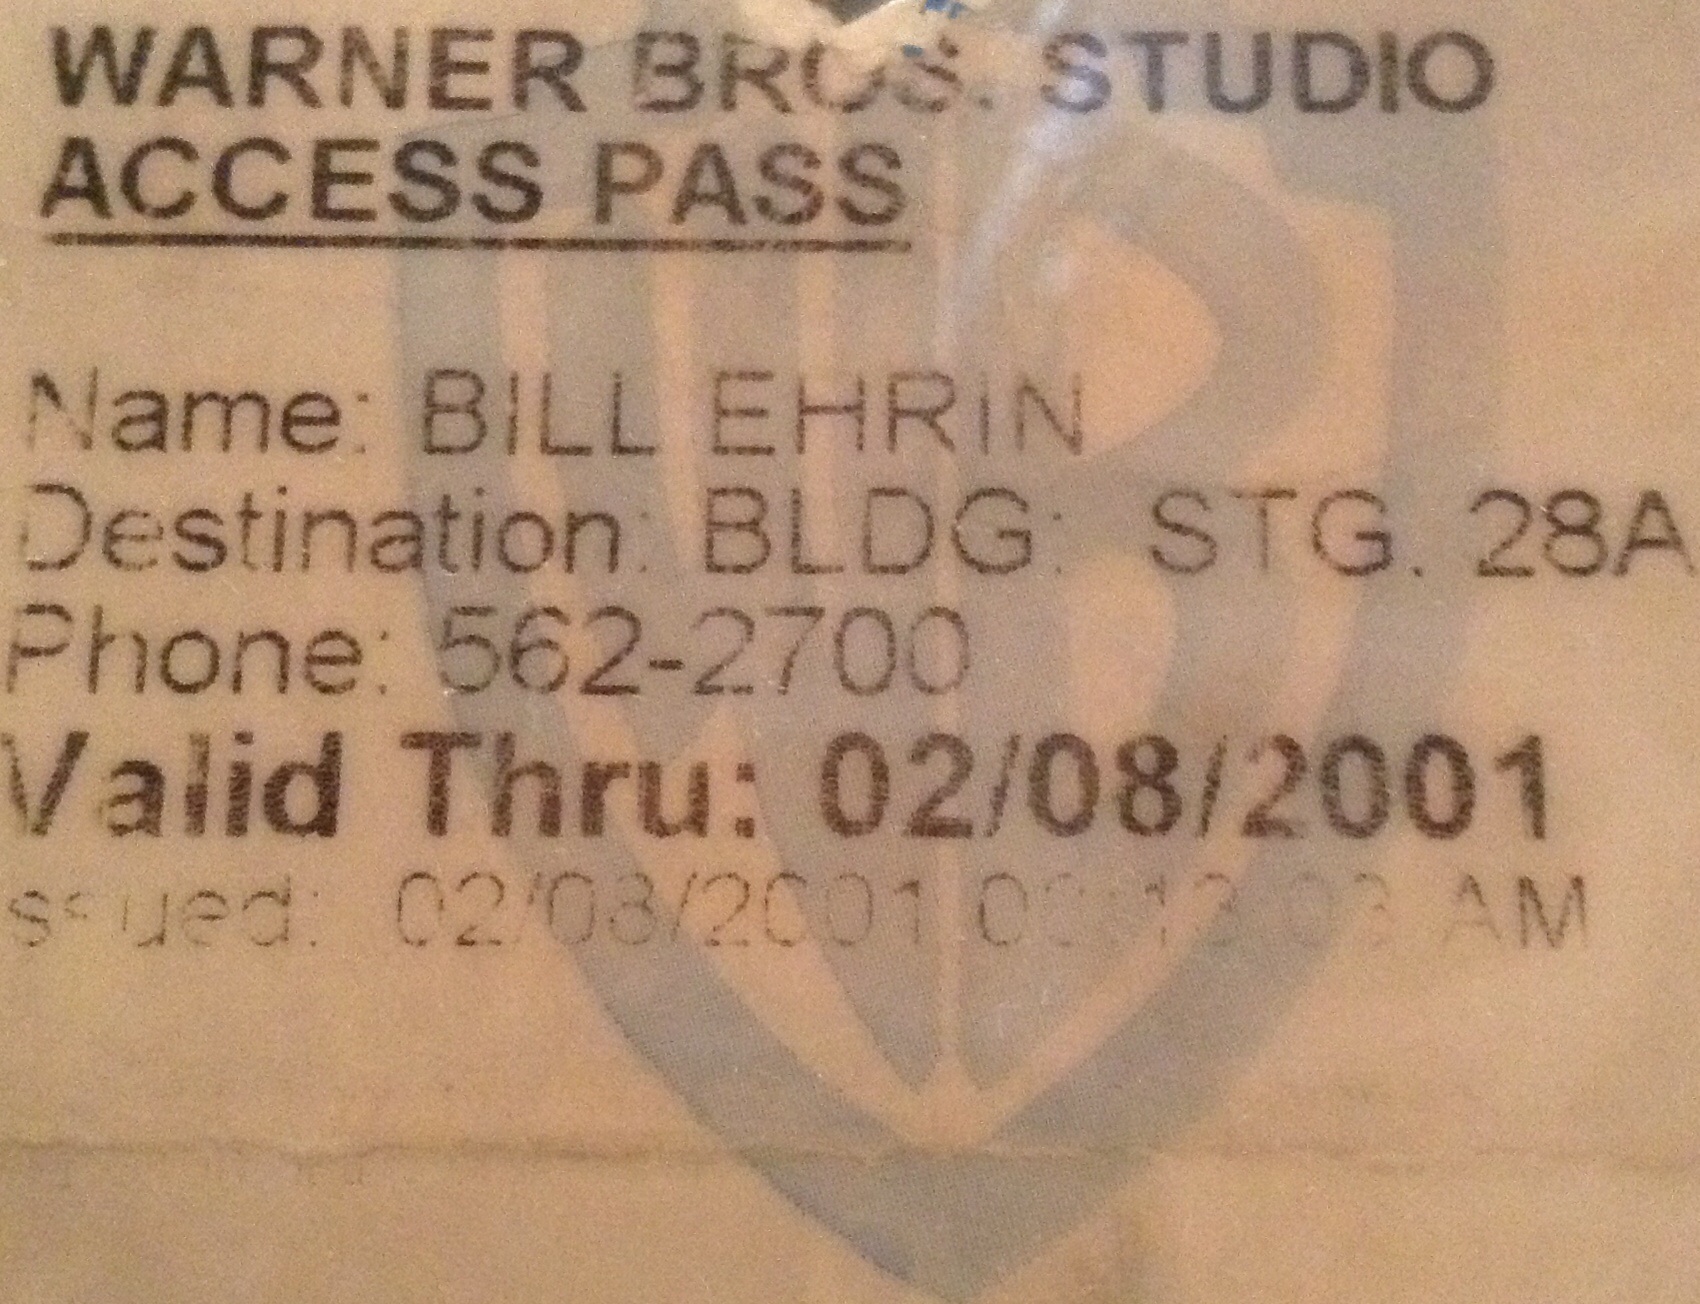 Warner Bros. Studio pass for Bill Ehrin